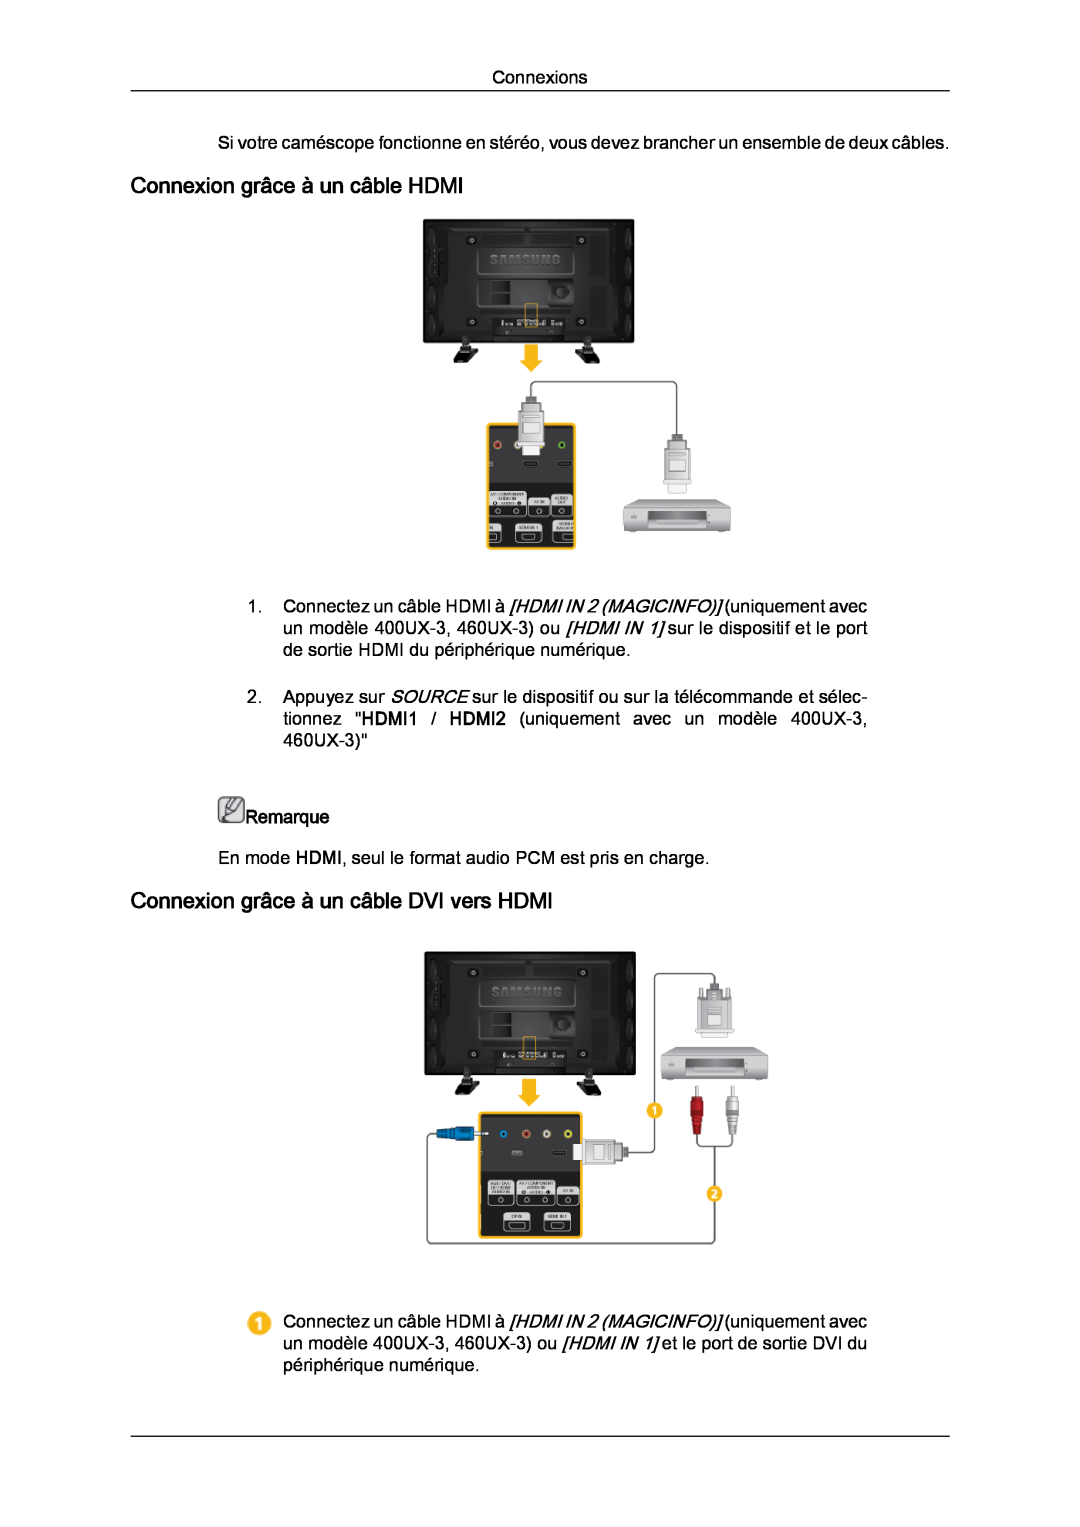 Samsung LH40GWTLBC/EN, LH40GWSLBC/EN Connexion grâce à un câble HDMI, Connexion grâce à un câble DVI vers HDMI, Remarque 